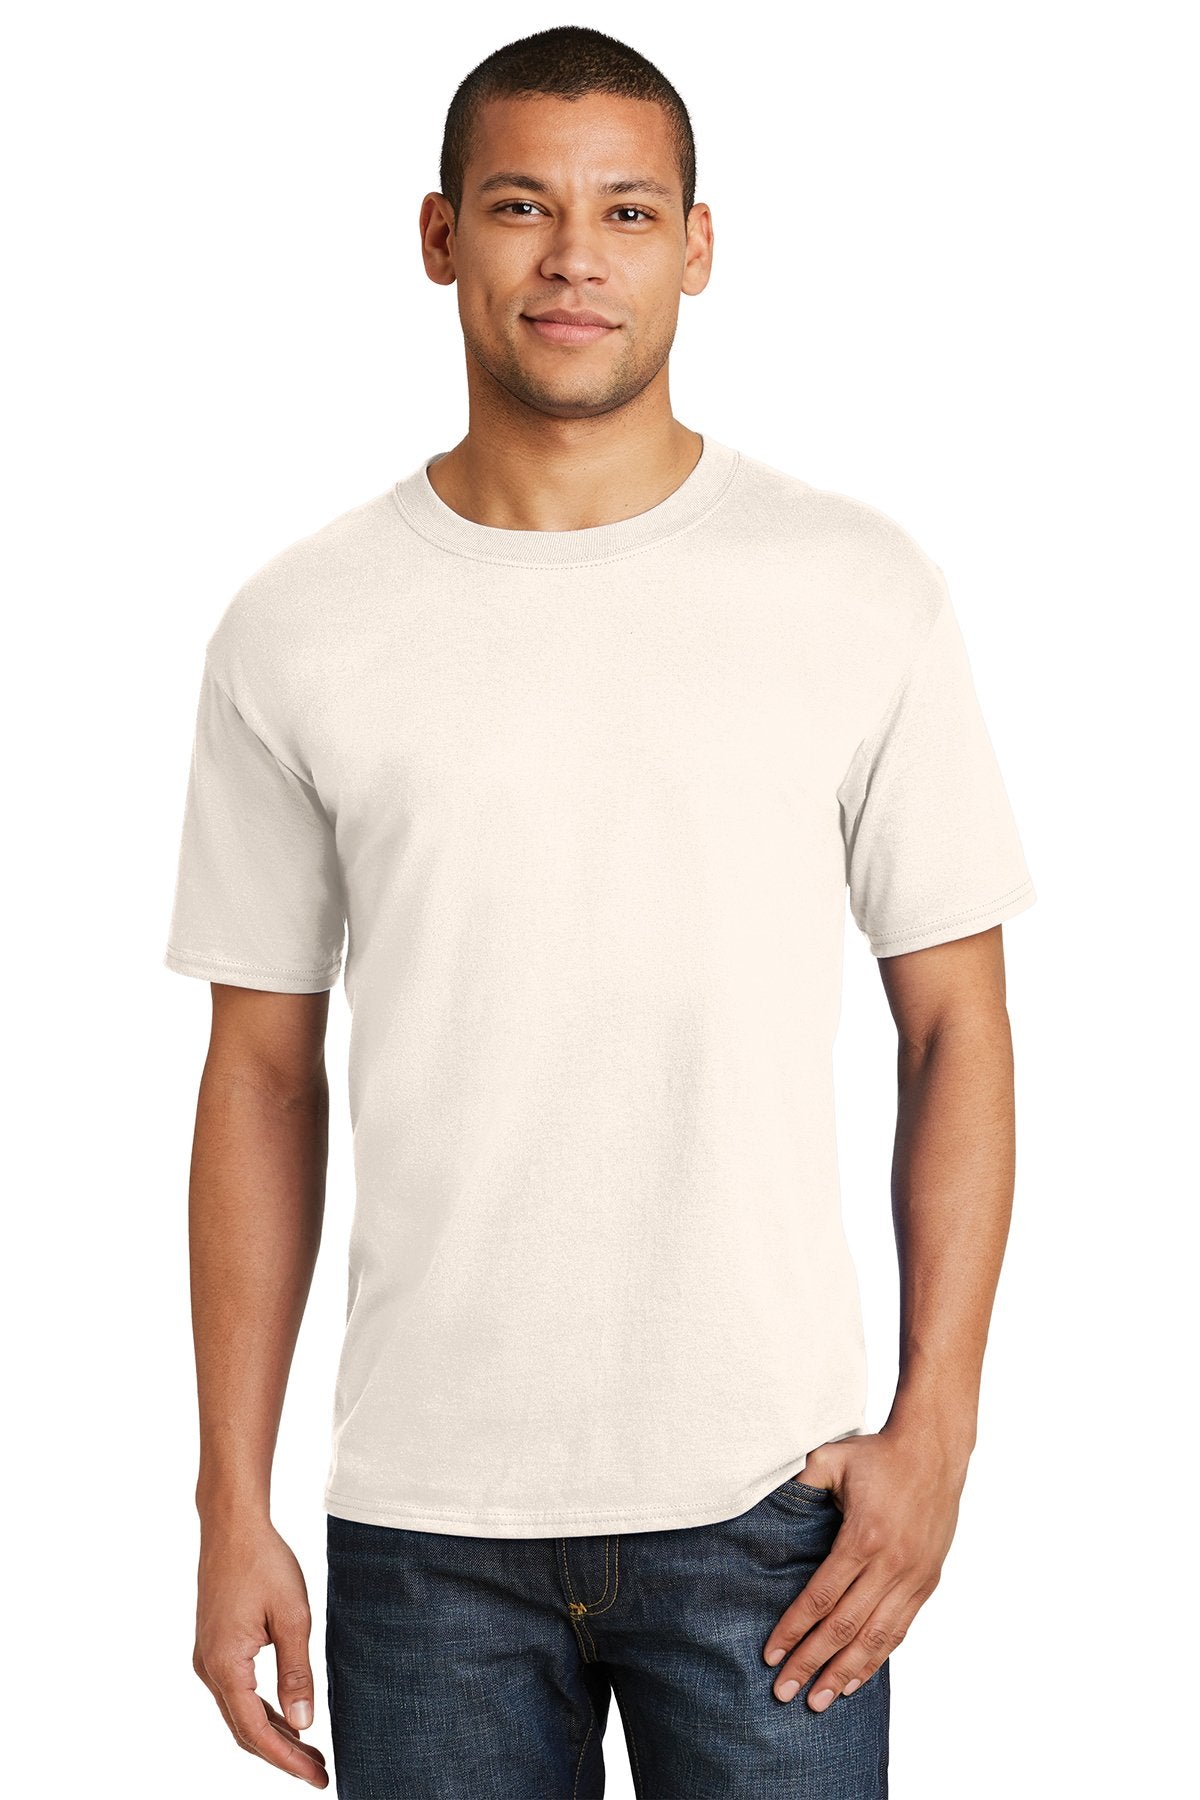 hanes beefy cotton t shirt 5180 natural